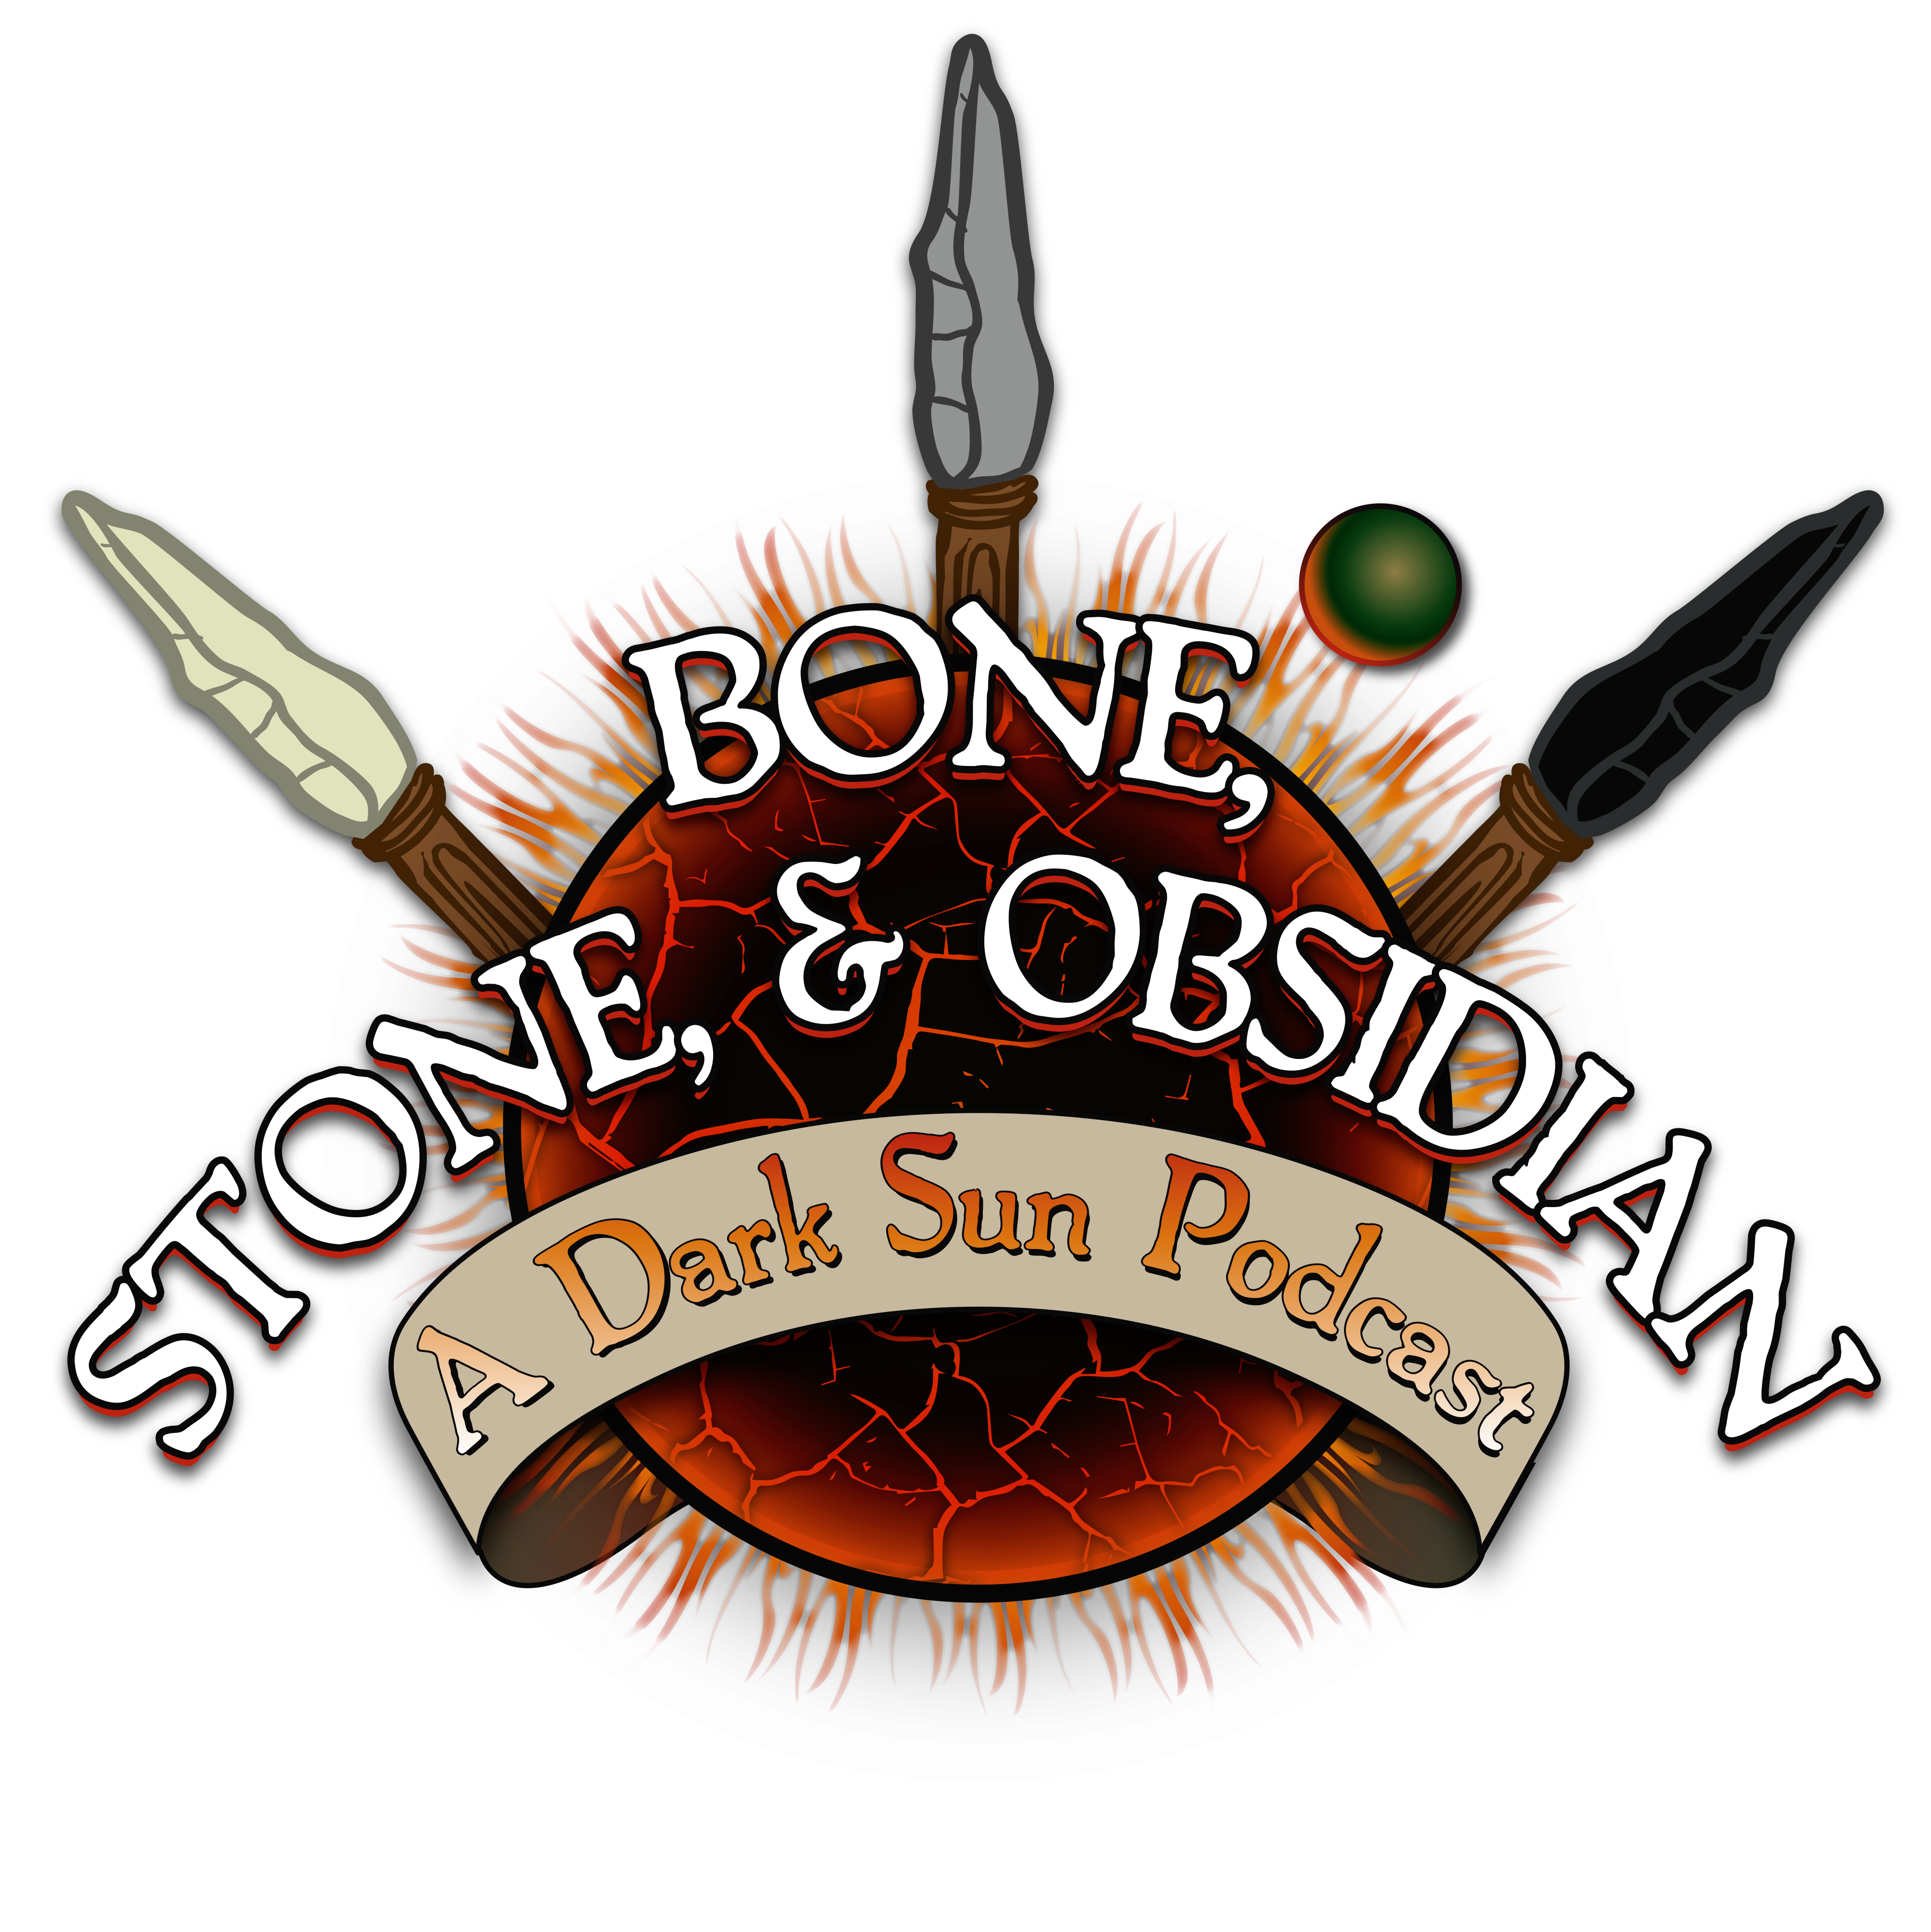 The logo for the "Bone, Stone & Obsidian" Dark Sun podcast